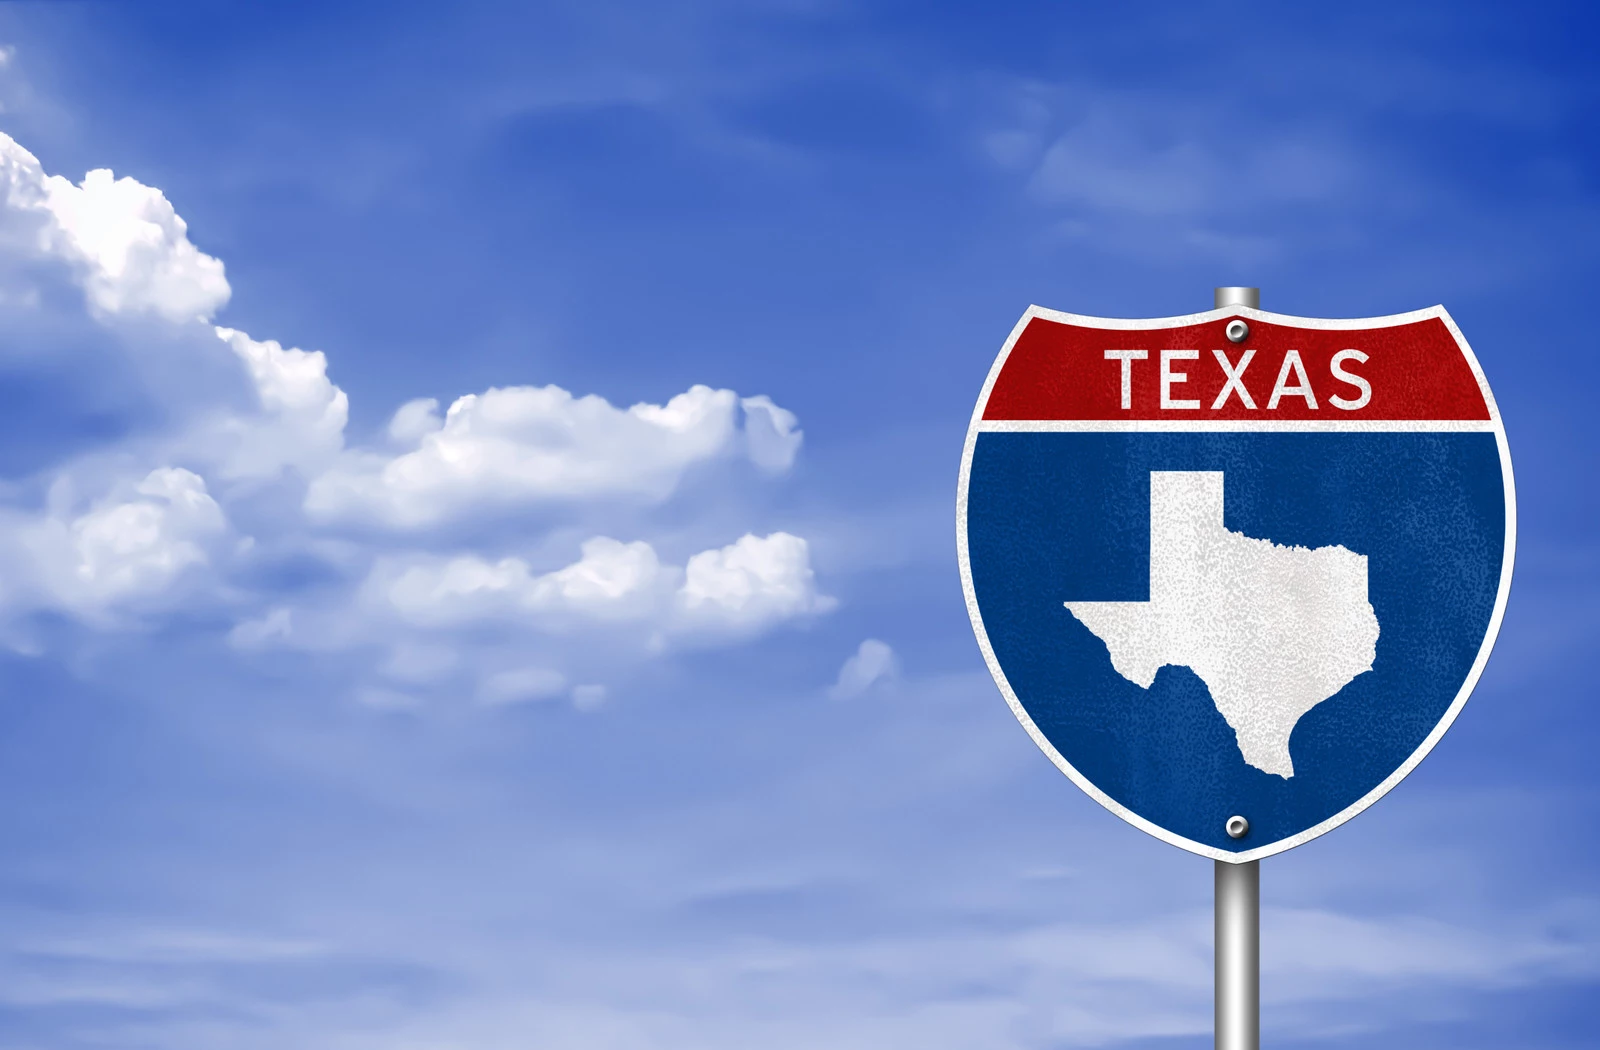 Texas road sign concept